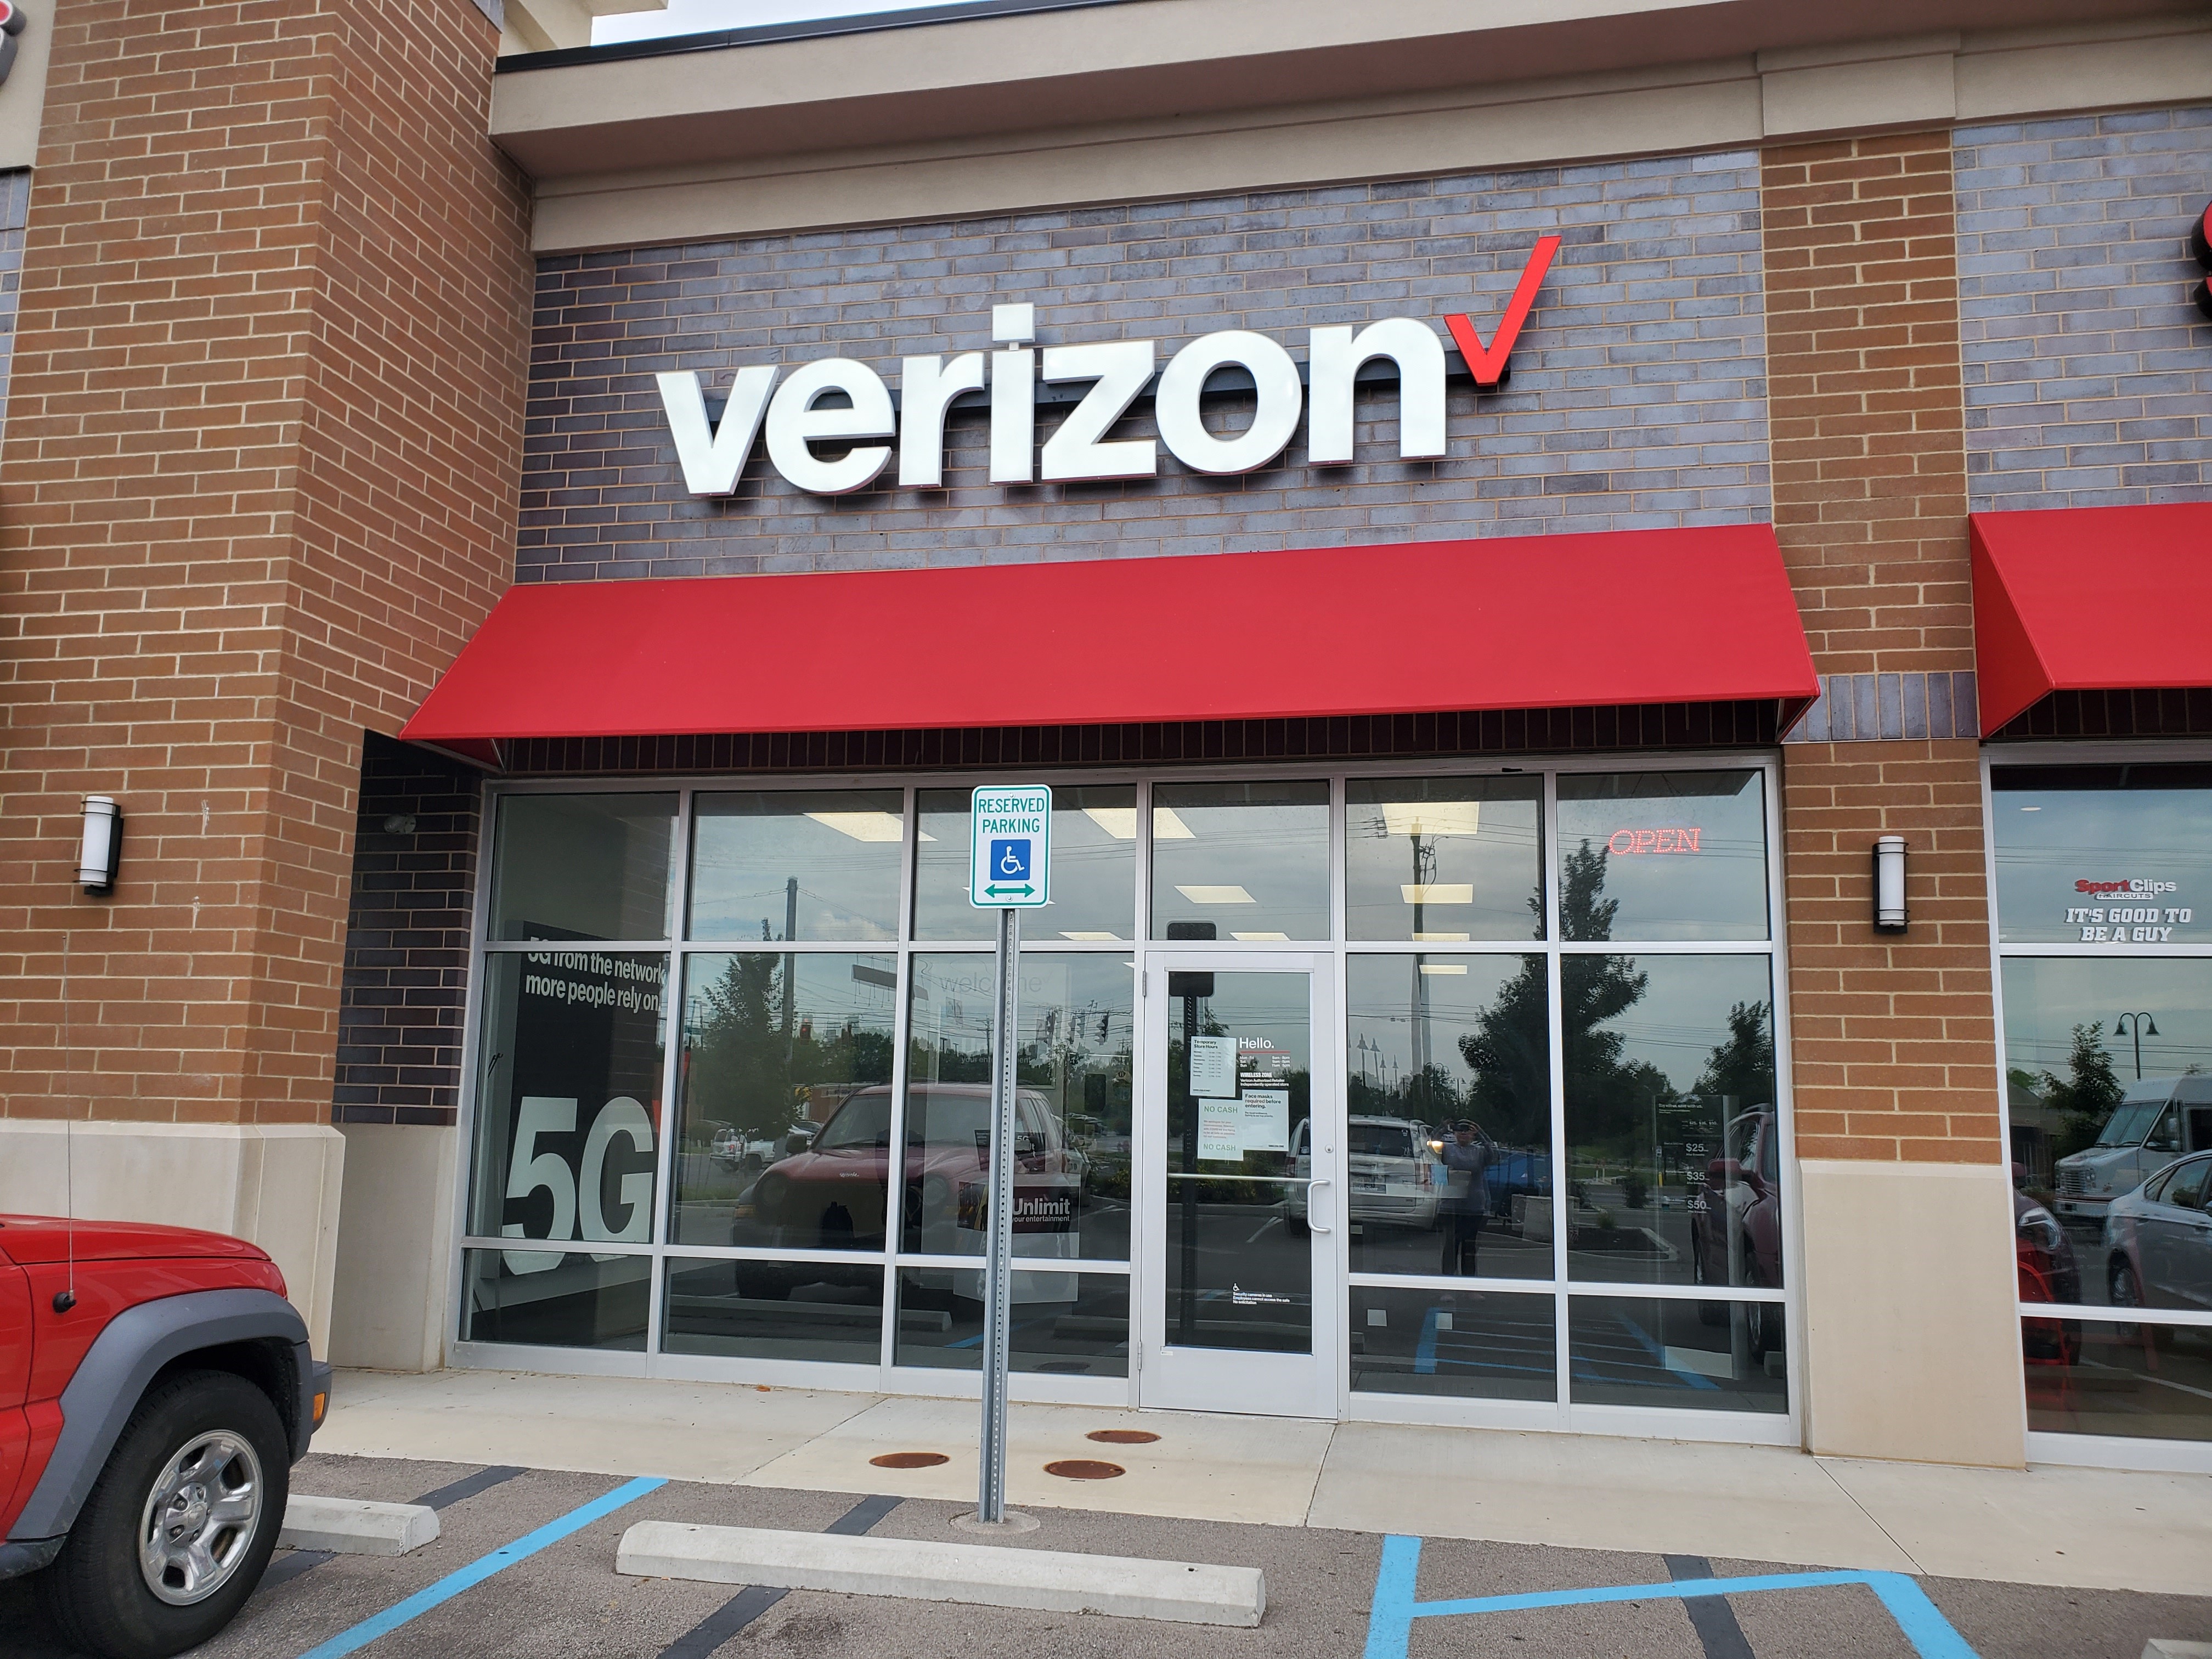 Wireless Zone® of Westfield, Verizon Authorized Retailer
3300 E. State Road 32
Westfield, IN